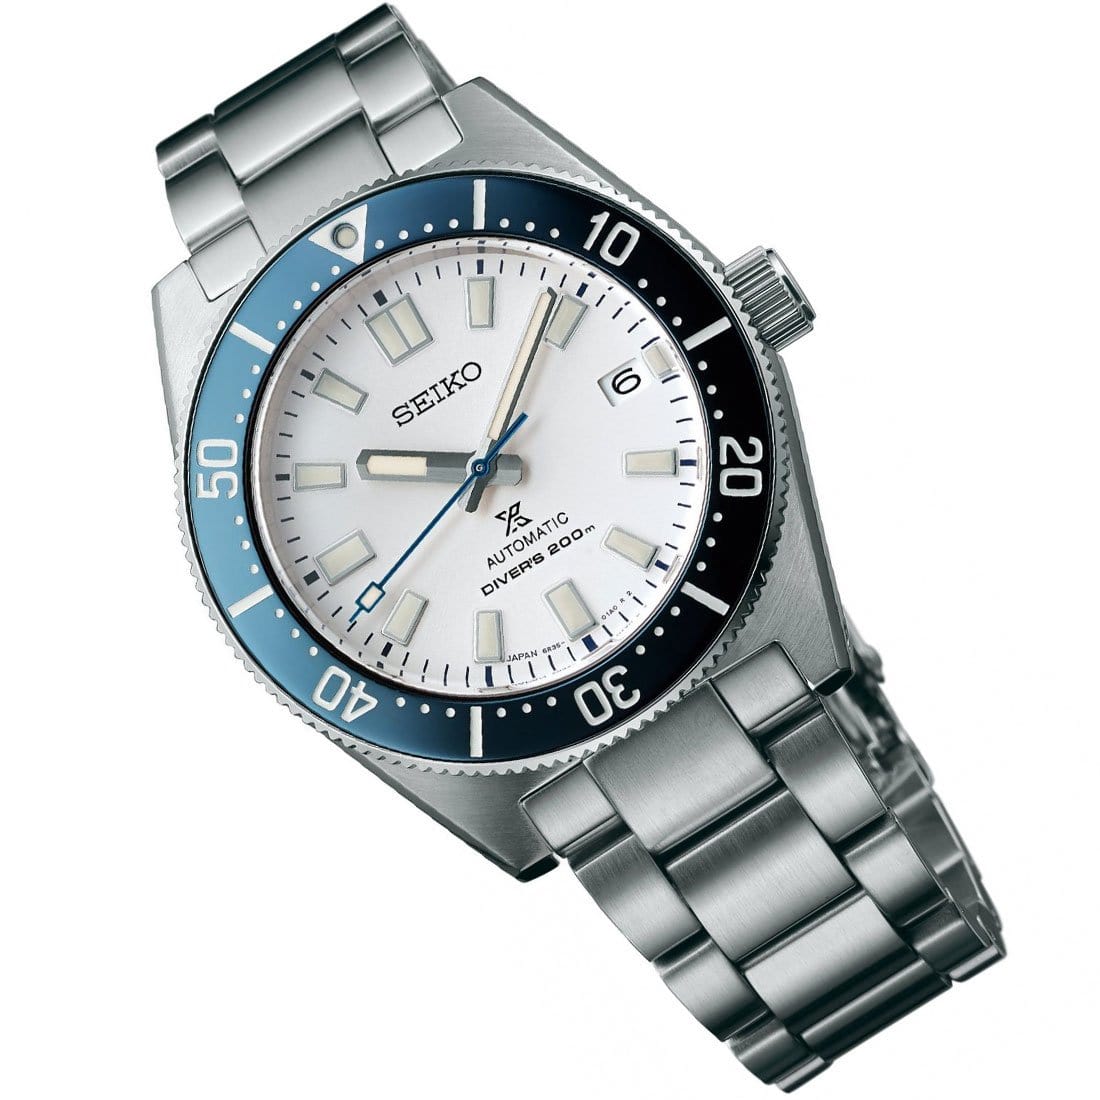 Seiko Prospex 140th Anniversary SBDC139 Automatic Limited Edition JDM Watch